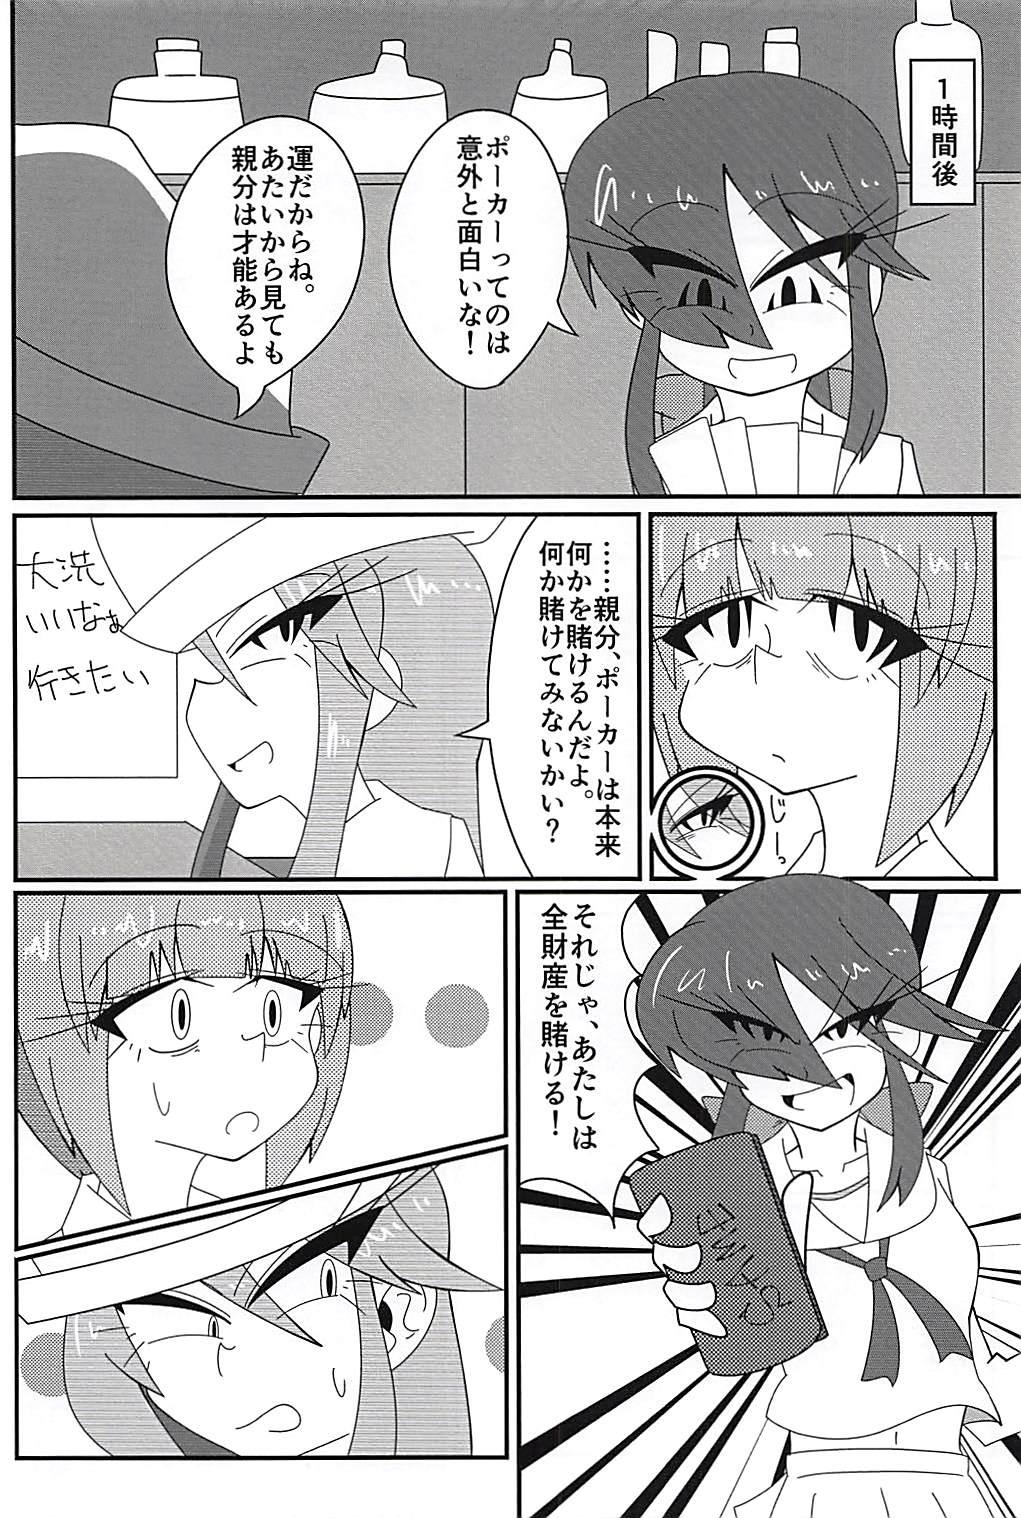 Masterbate Arakuremono no Leader, Haiboku! - Girls und panzer Job - Page 3